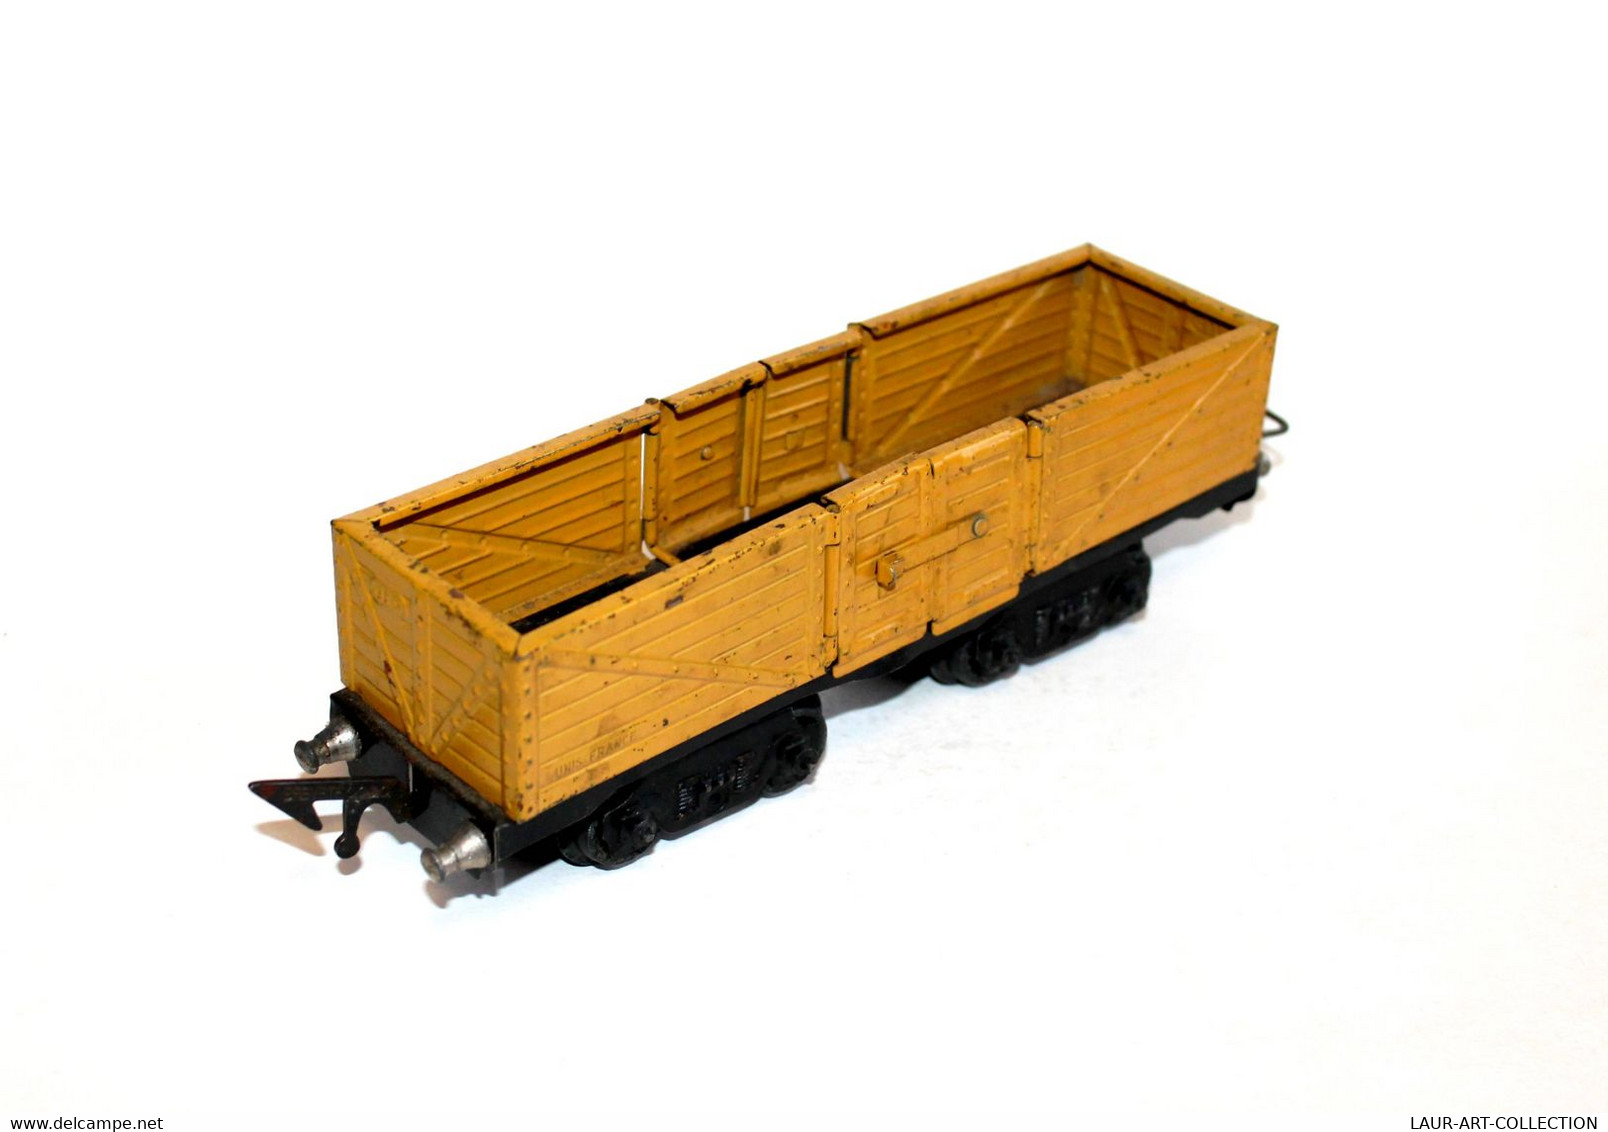 JEP - ANCIEN WAGON TOMBEREAU AVEC PORTE A BOGIES - ECH: O / 0 - MINIATURE TRAIN - MODELISME FERROVIAIRE       (2811.1) - Goods Waggons (wagons)